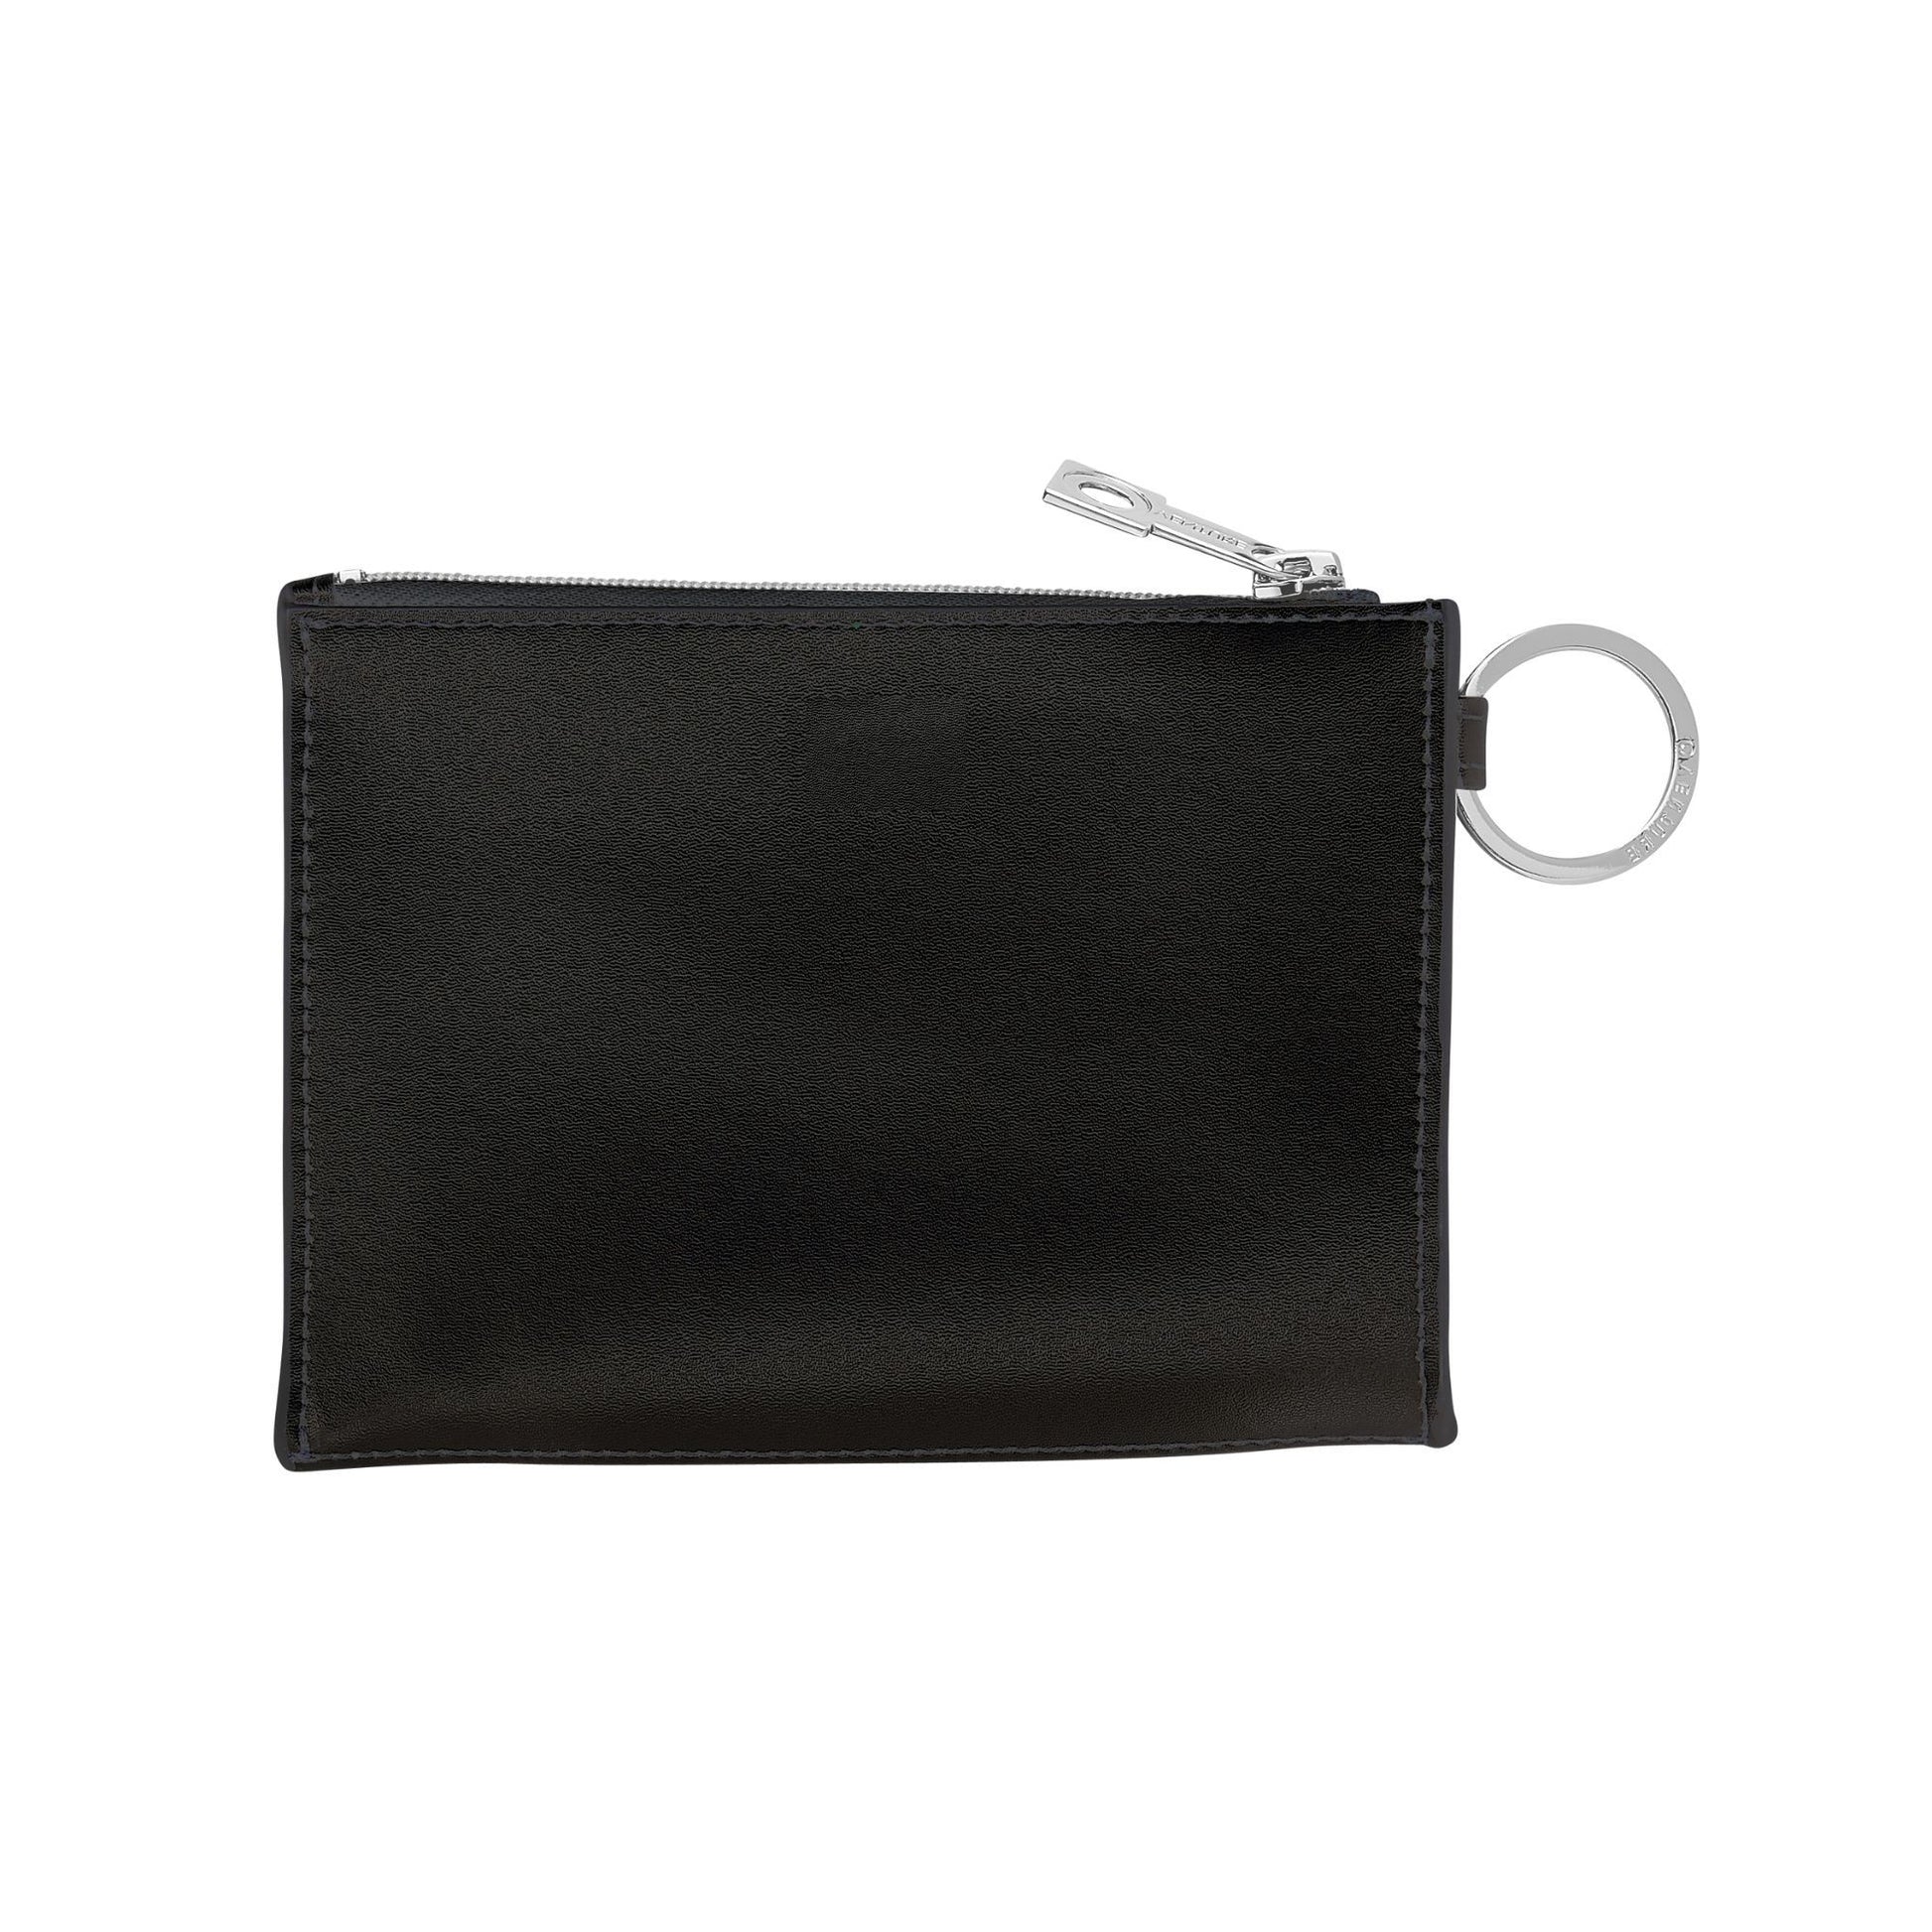 Black leather keychain wallet for stylish organization - back side.